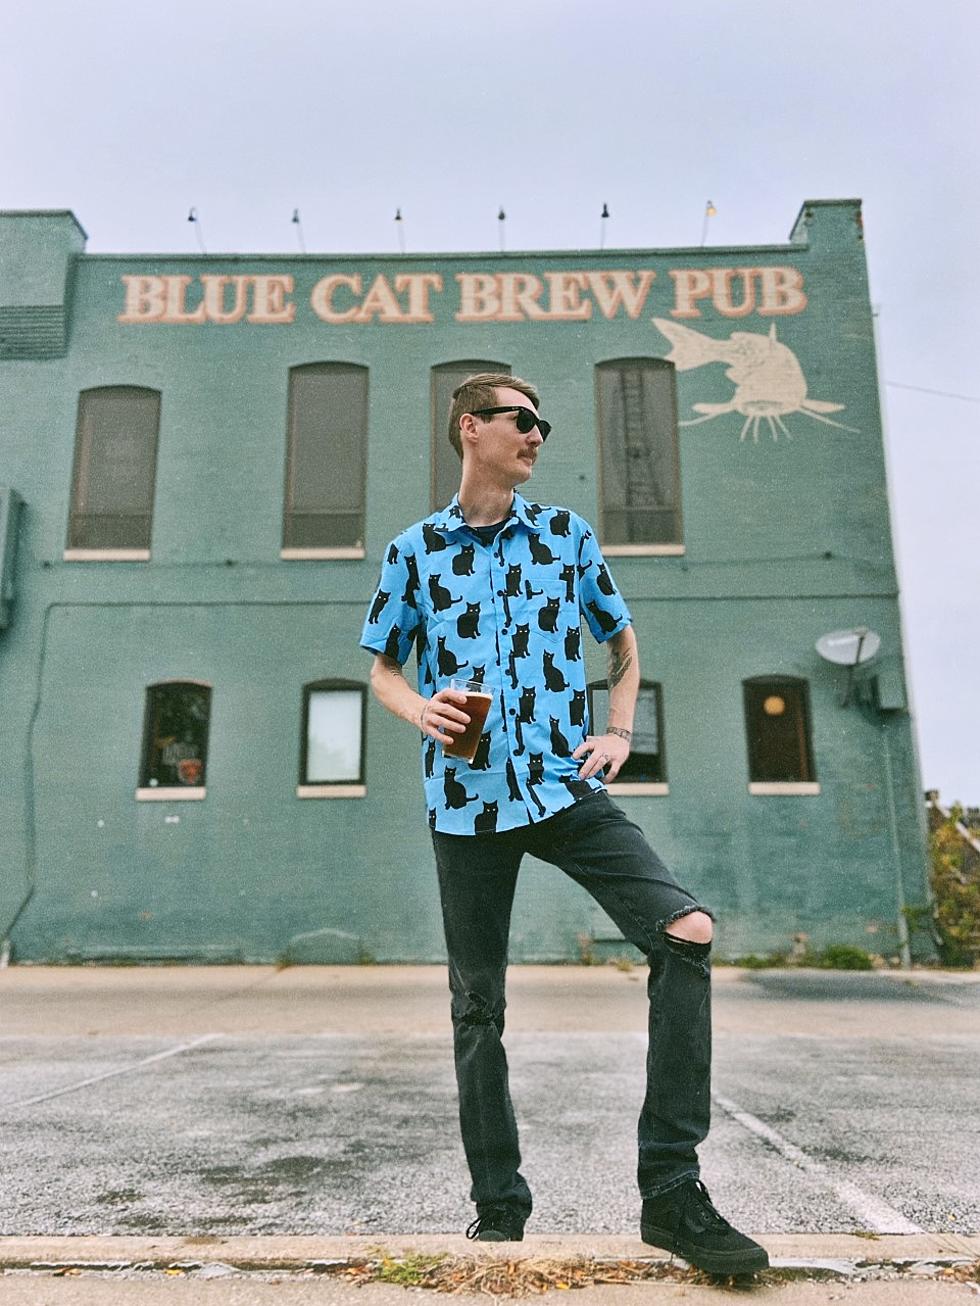 Blue Cat Brew Pub is BACK!!